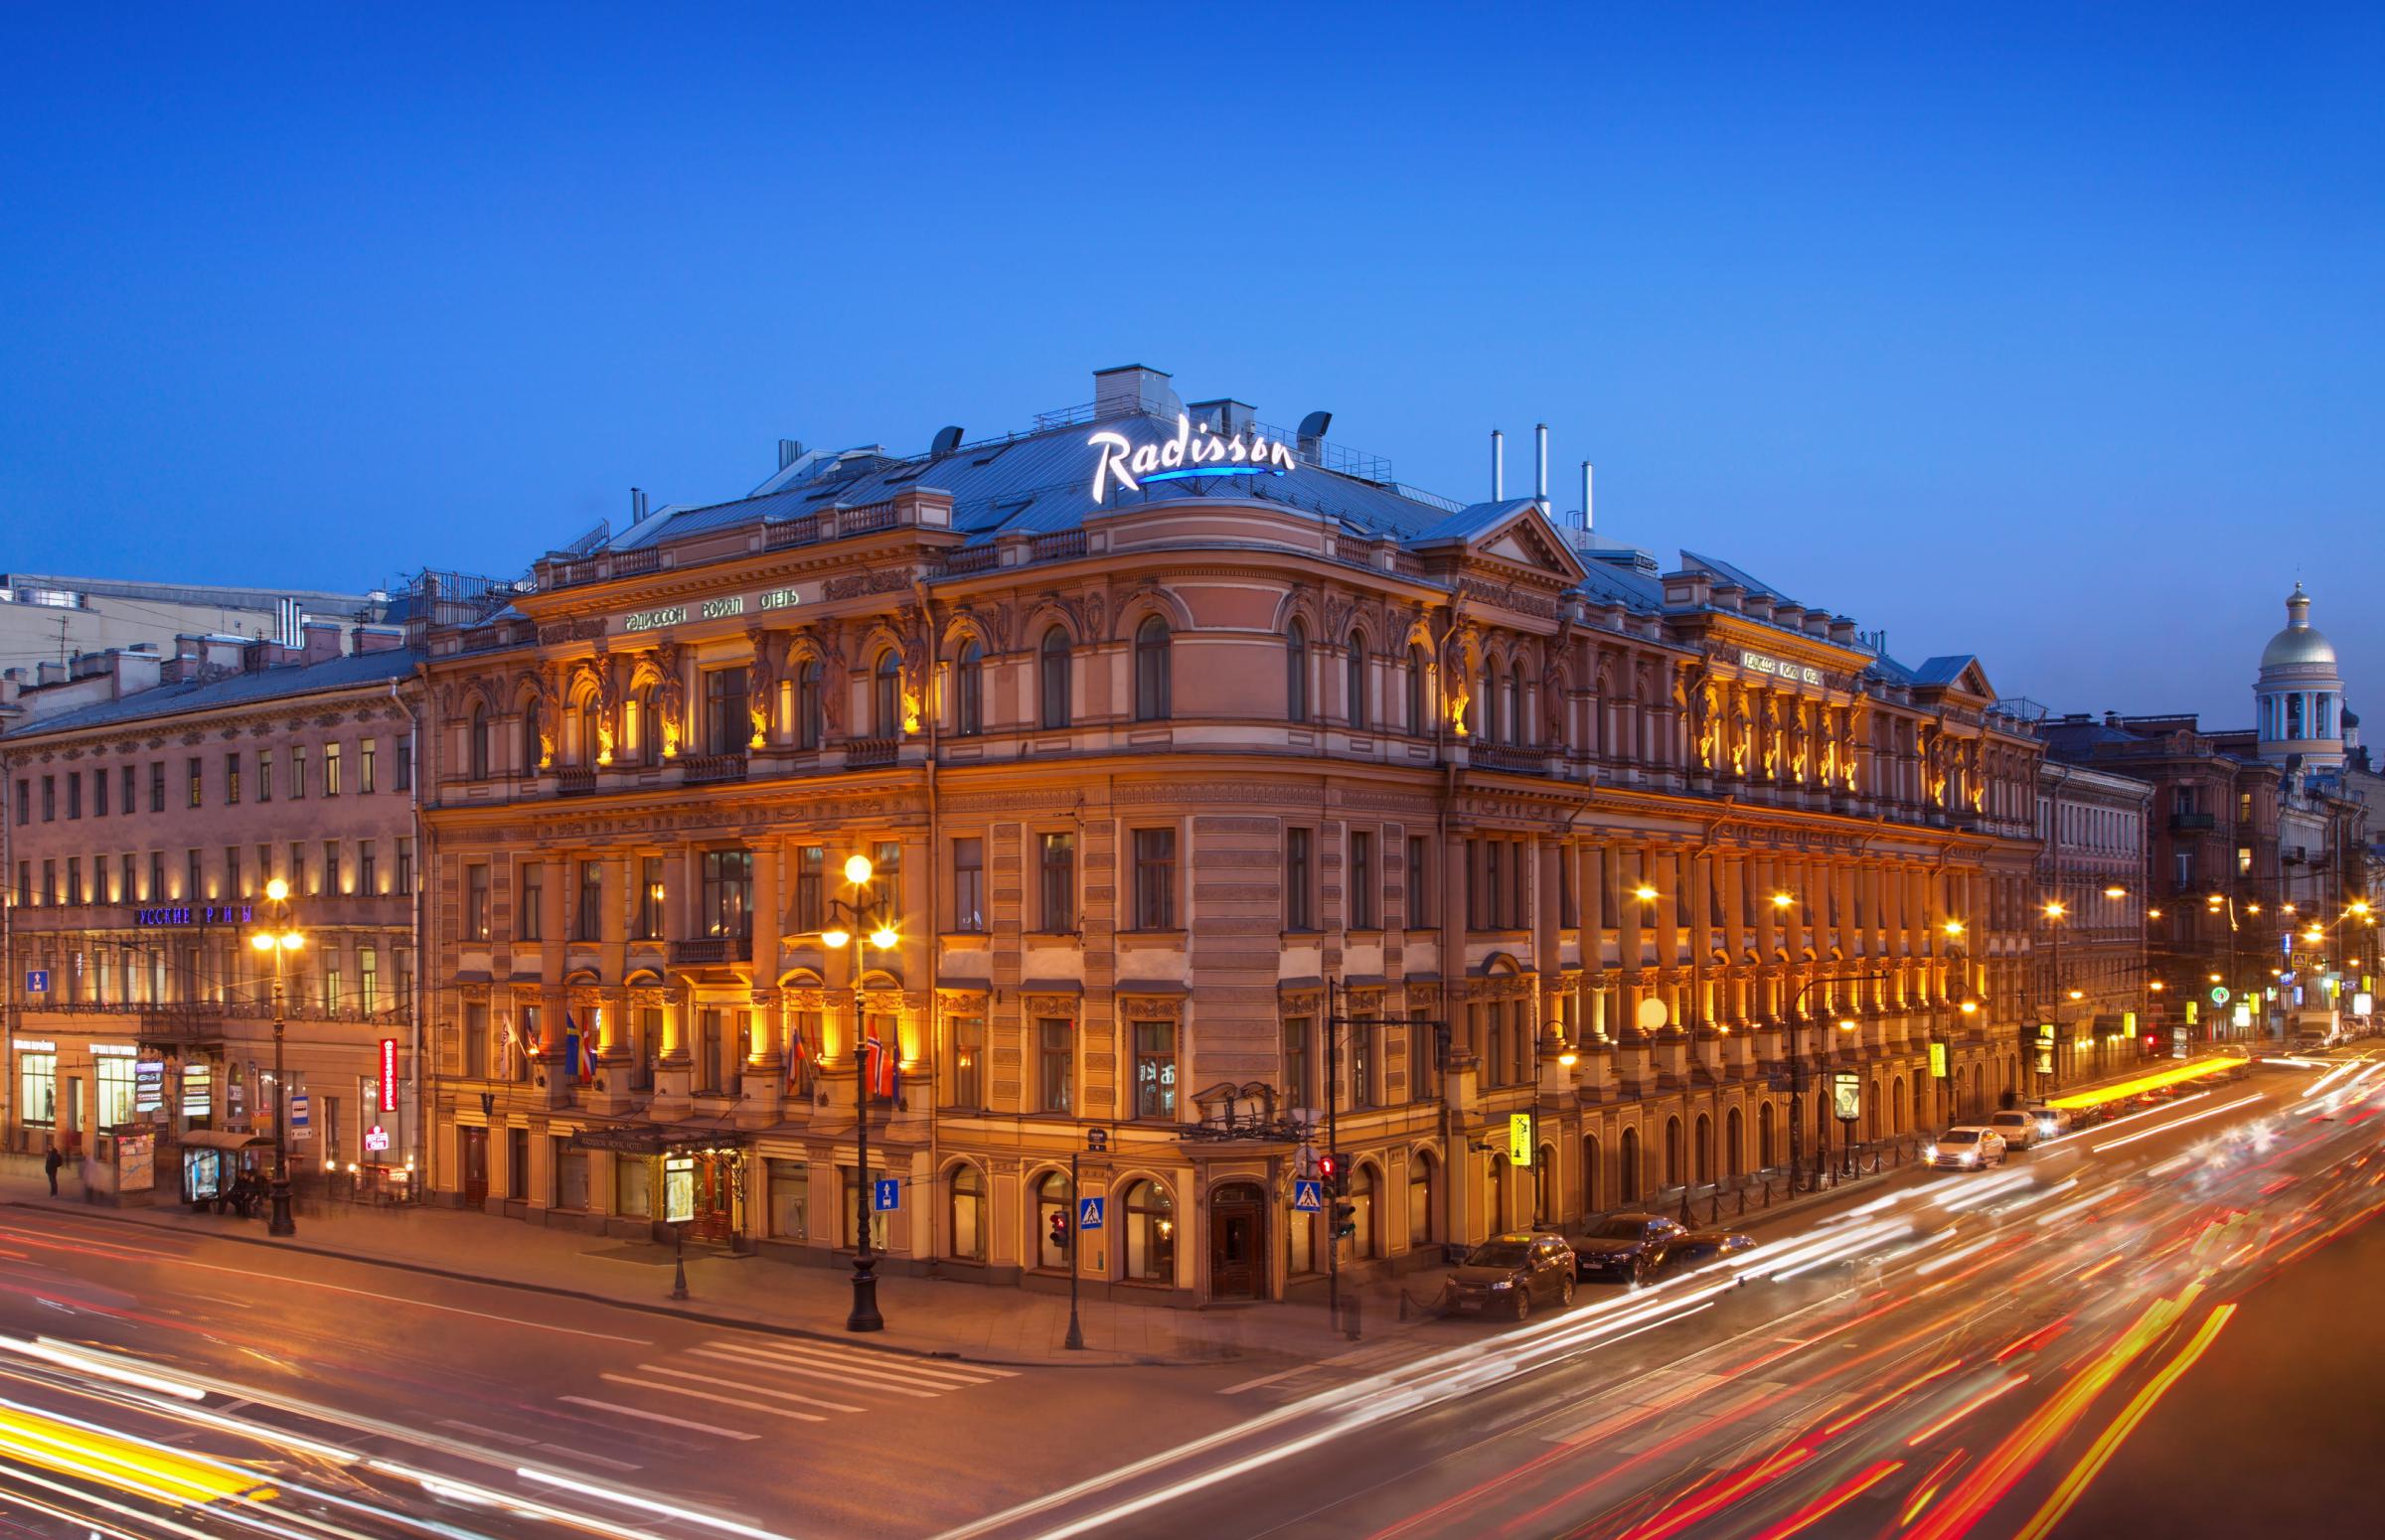 Cosmos saint petersburg nevsky royal hotel. Рэдиссон Роял отель Санкт-Петербург.